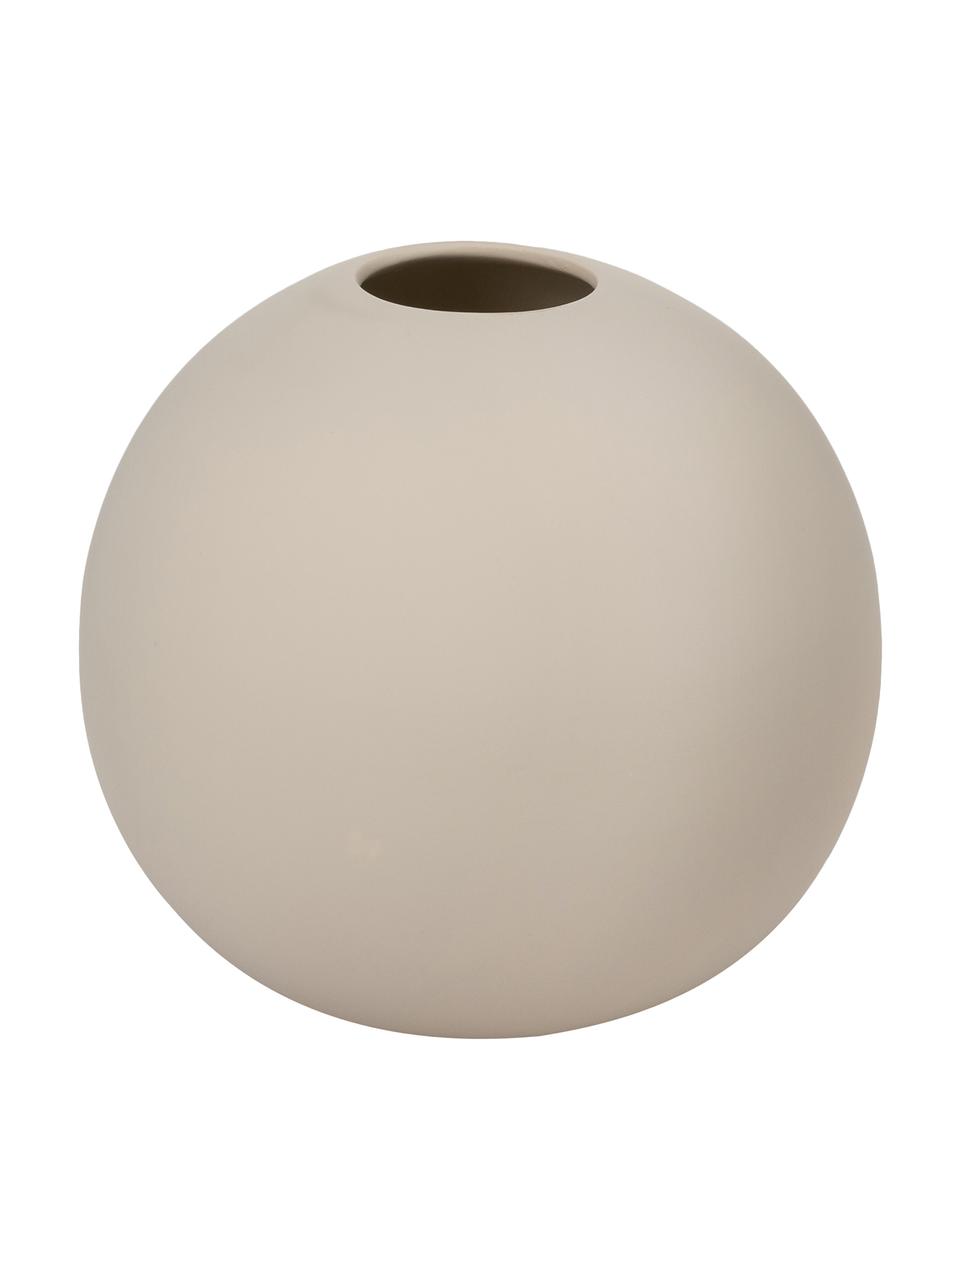 Vaso in ceramica dipinto a mano Ball, Ceramica, Beige chiaro, Ø 10 x Alt. 10 cm